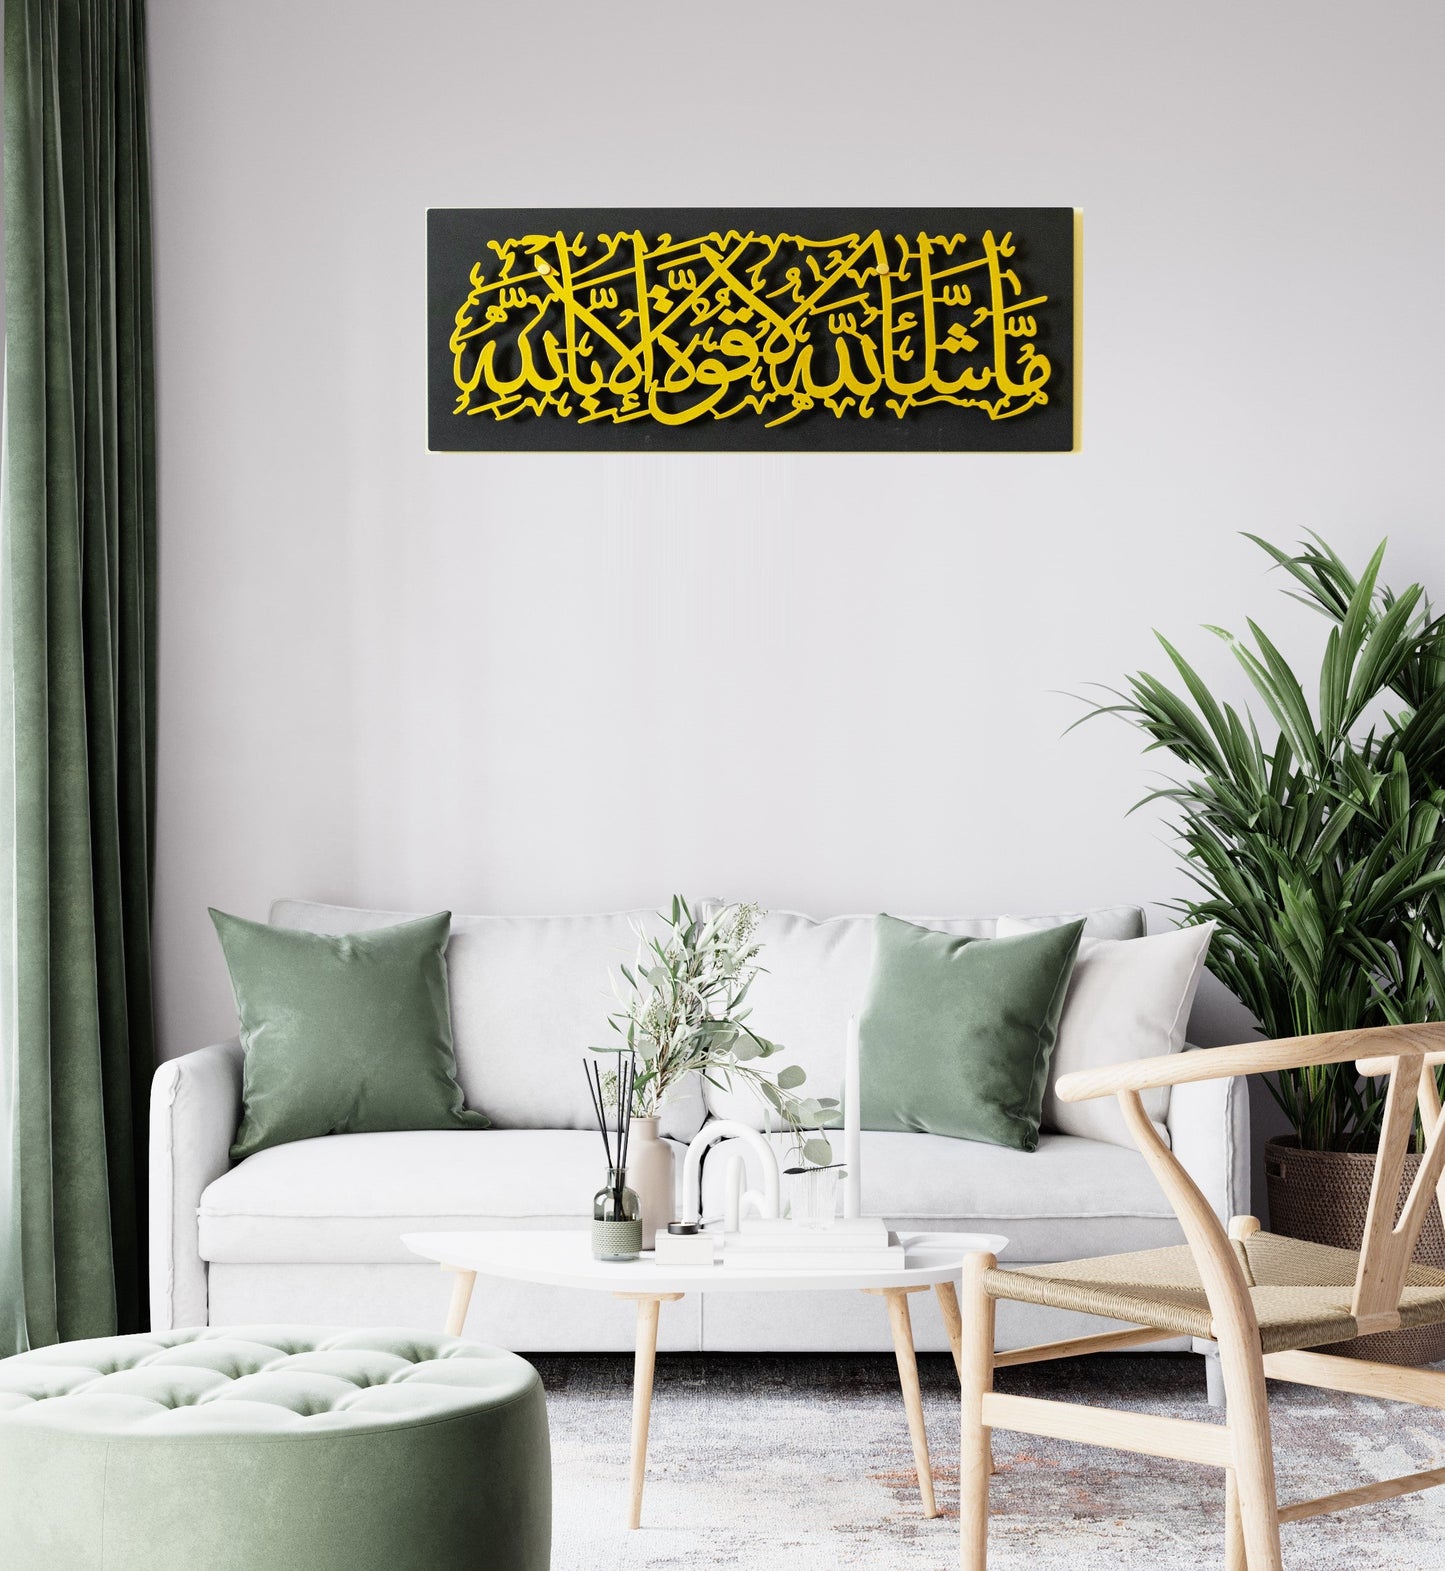 Masha Allah, No Power Except in Allah Wall Art | مَا شَاءَ اللَّهُ لَا قُوَّةَ إِلَّا بِاللَّهِ